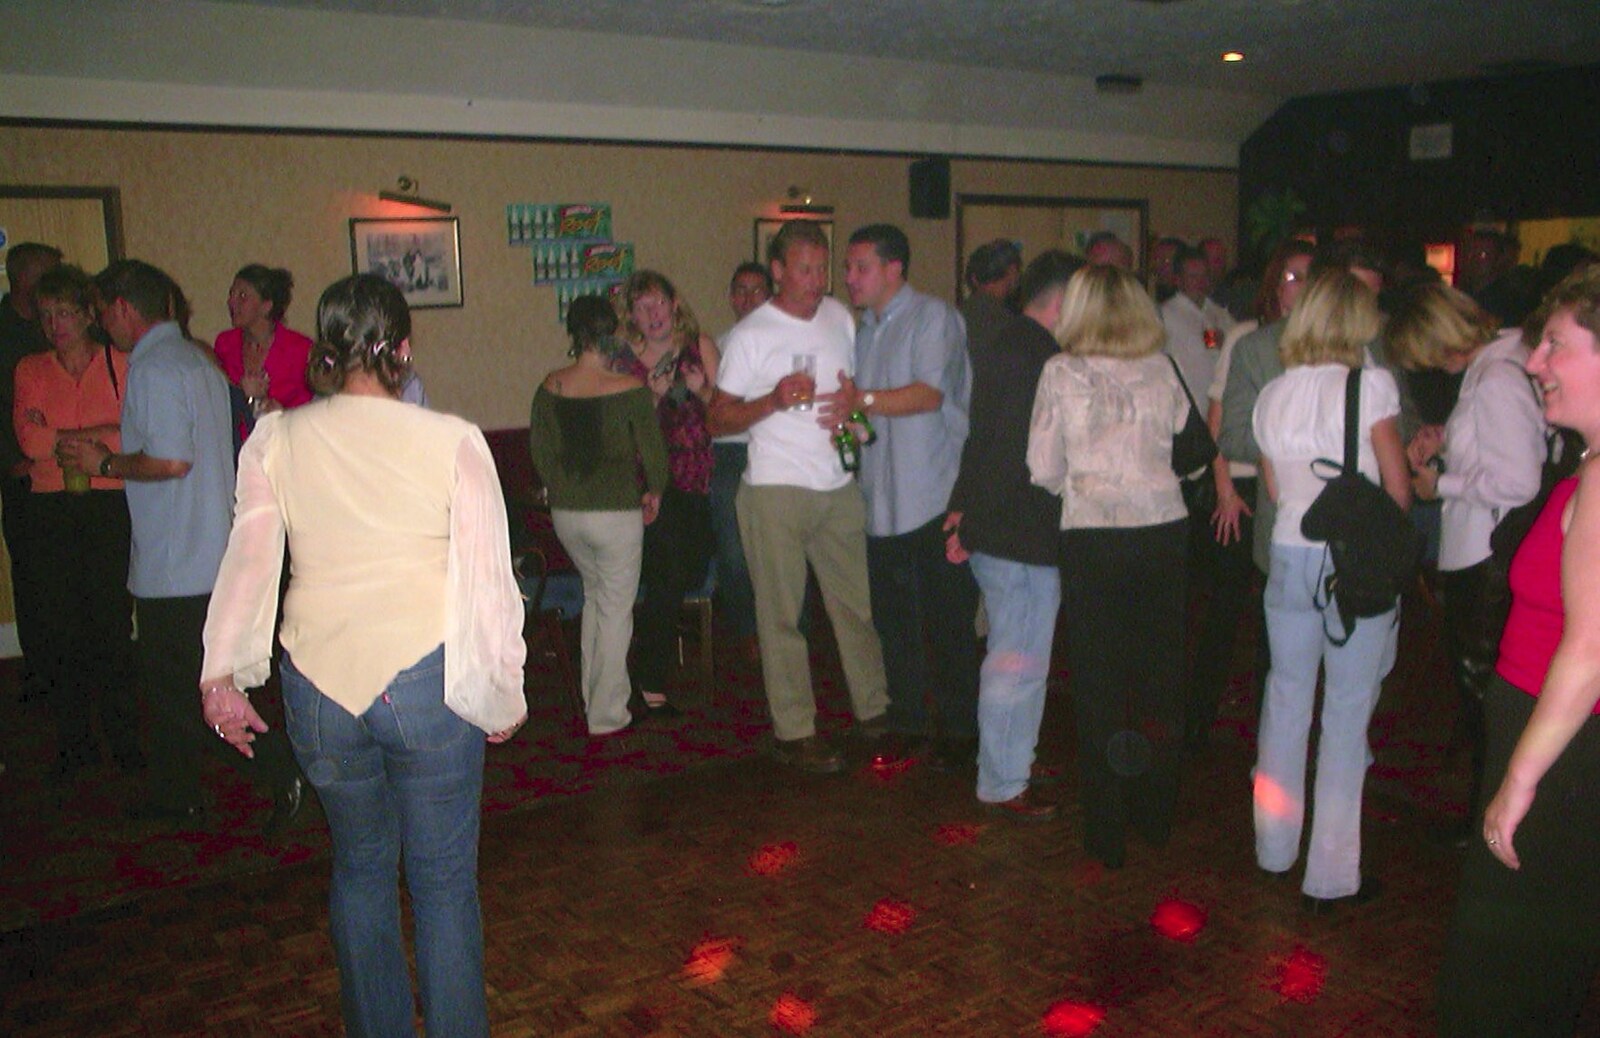 Arnewood School Class of '83 Reunion, Fawcett's Field, New Milton - 2nd November 2002: Mingling on the dance floor